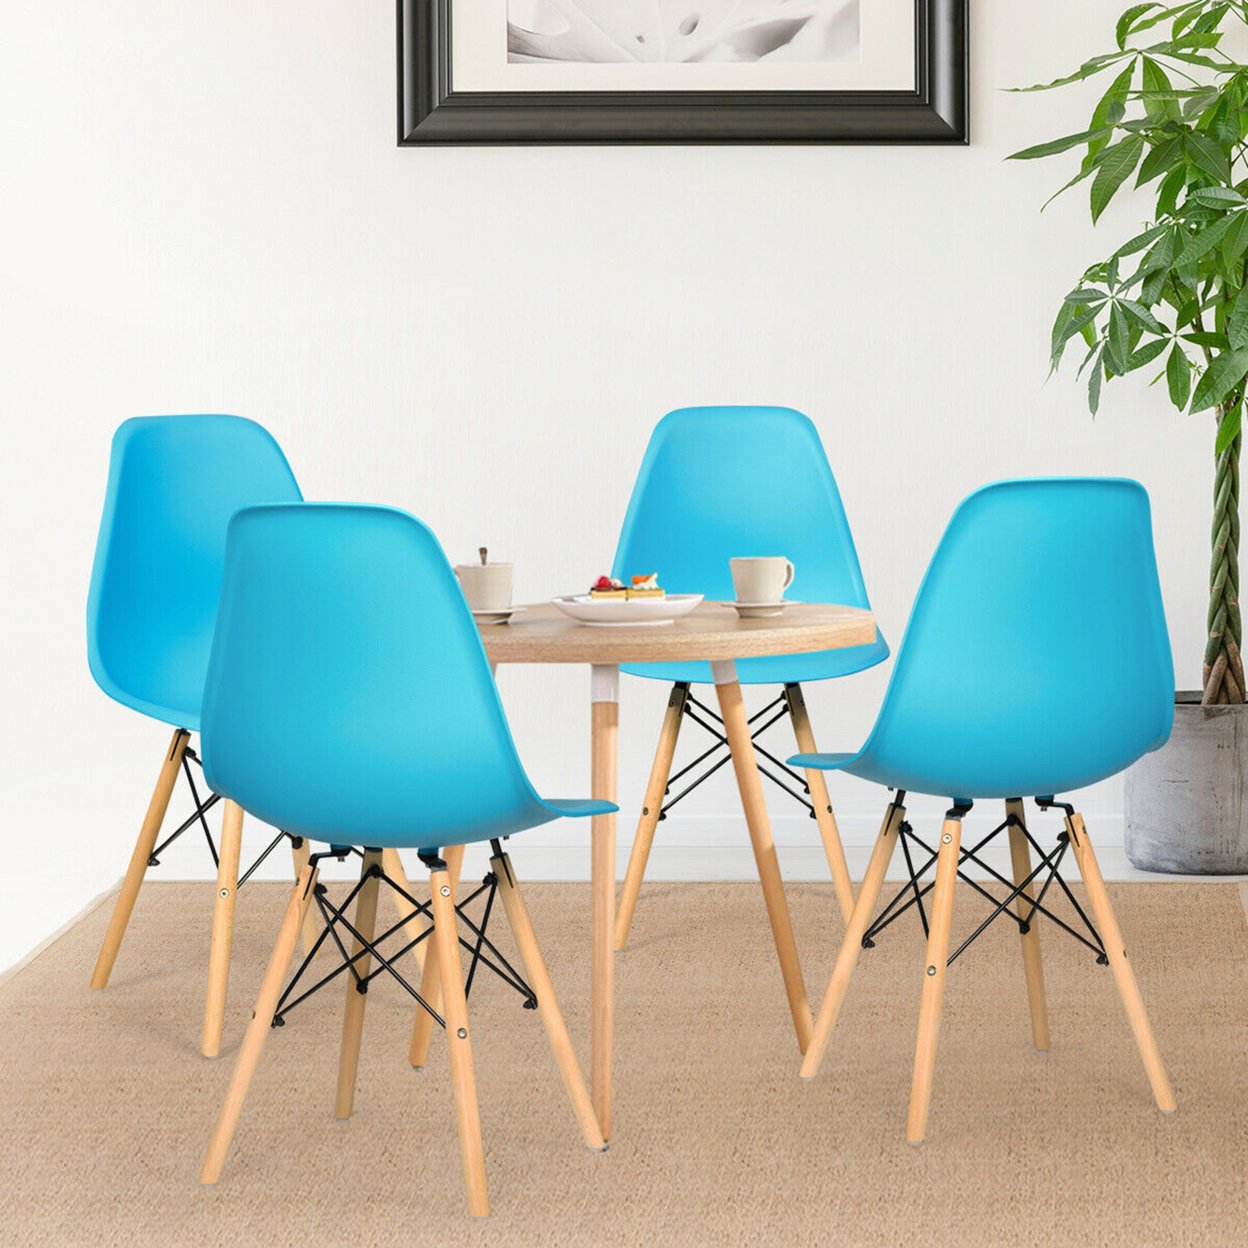 Set Of 4 Mid Century Modern DSW Dining Side Chair Wood Legs Blue